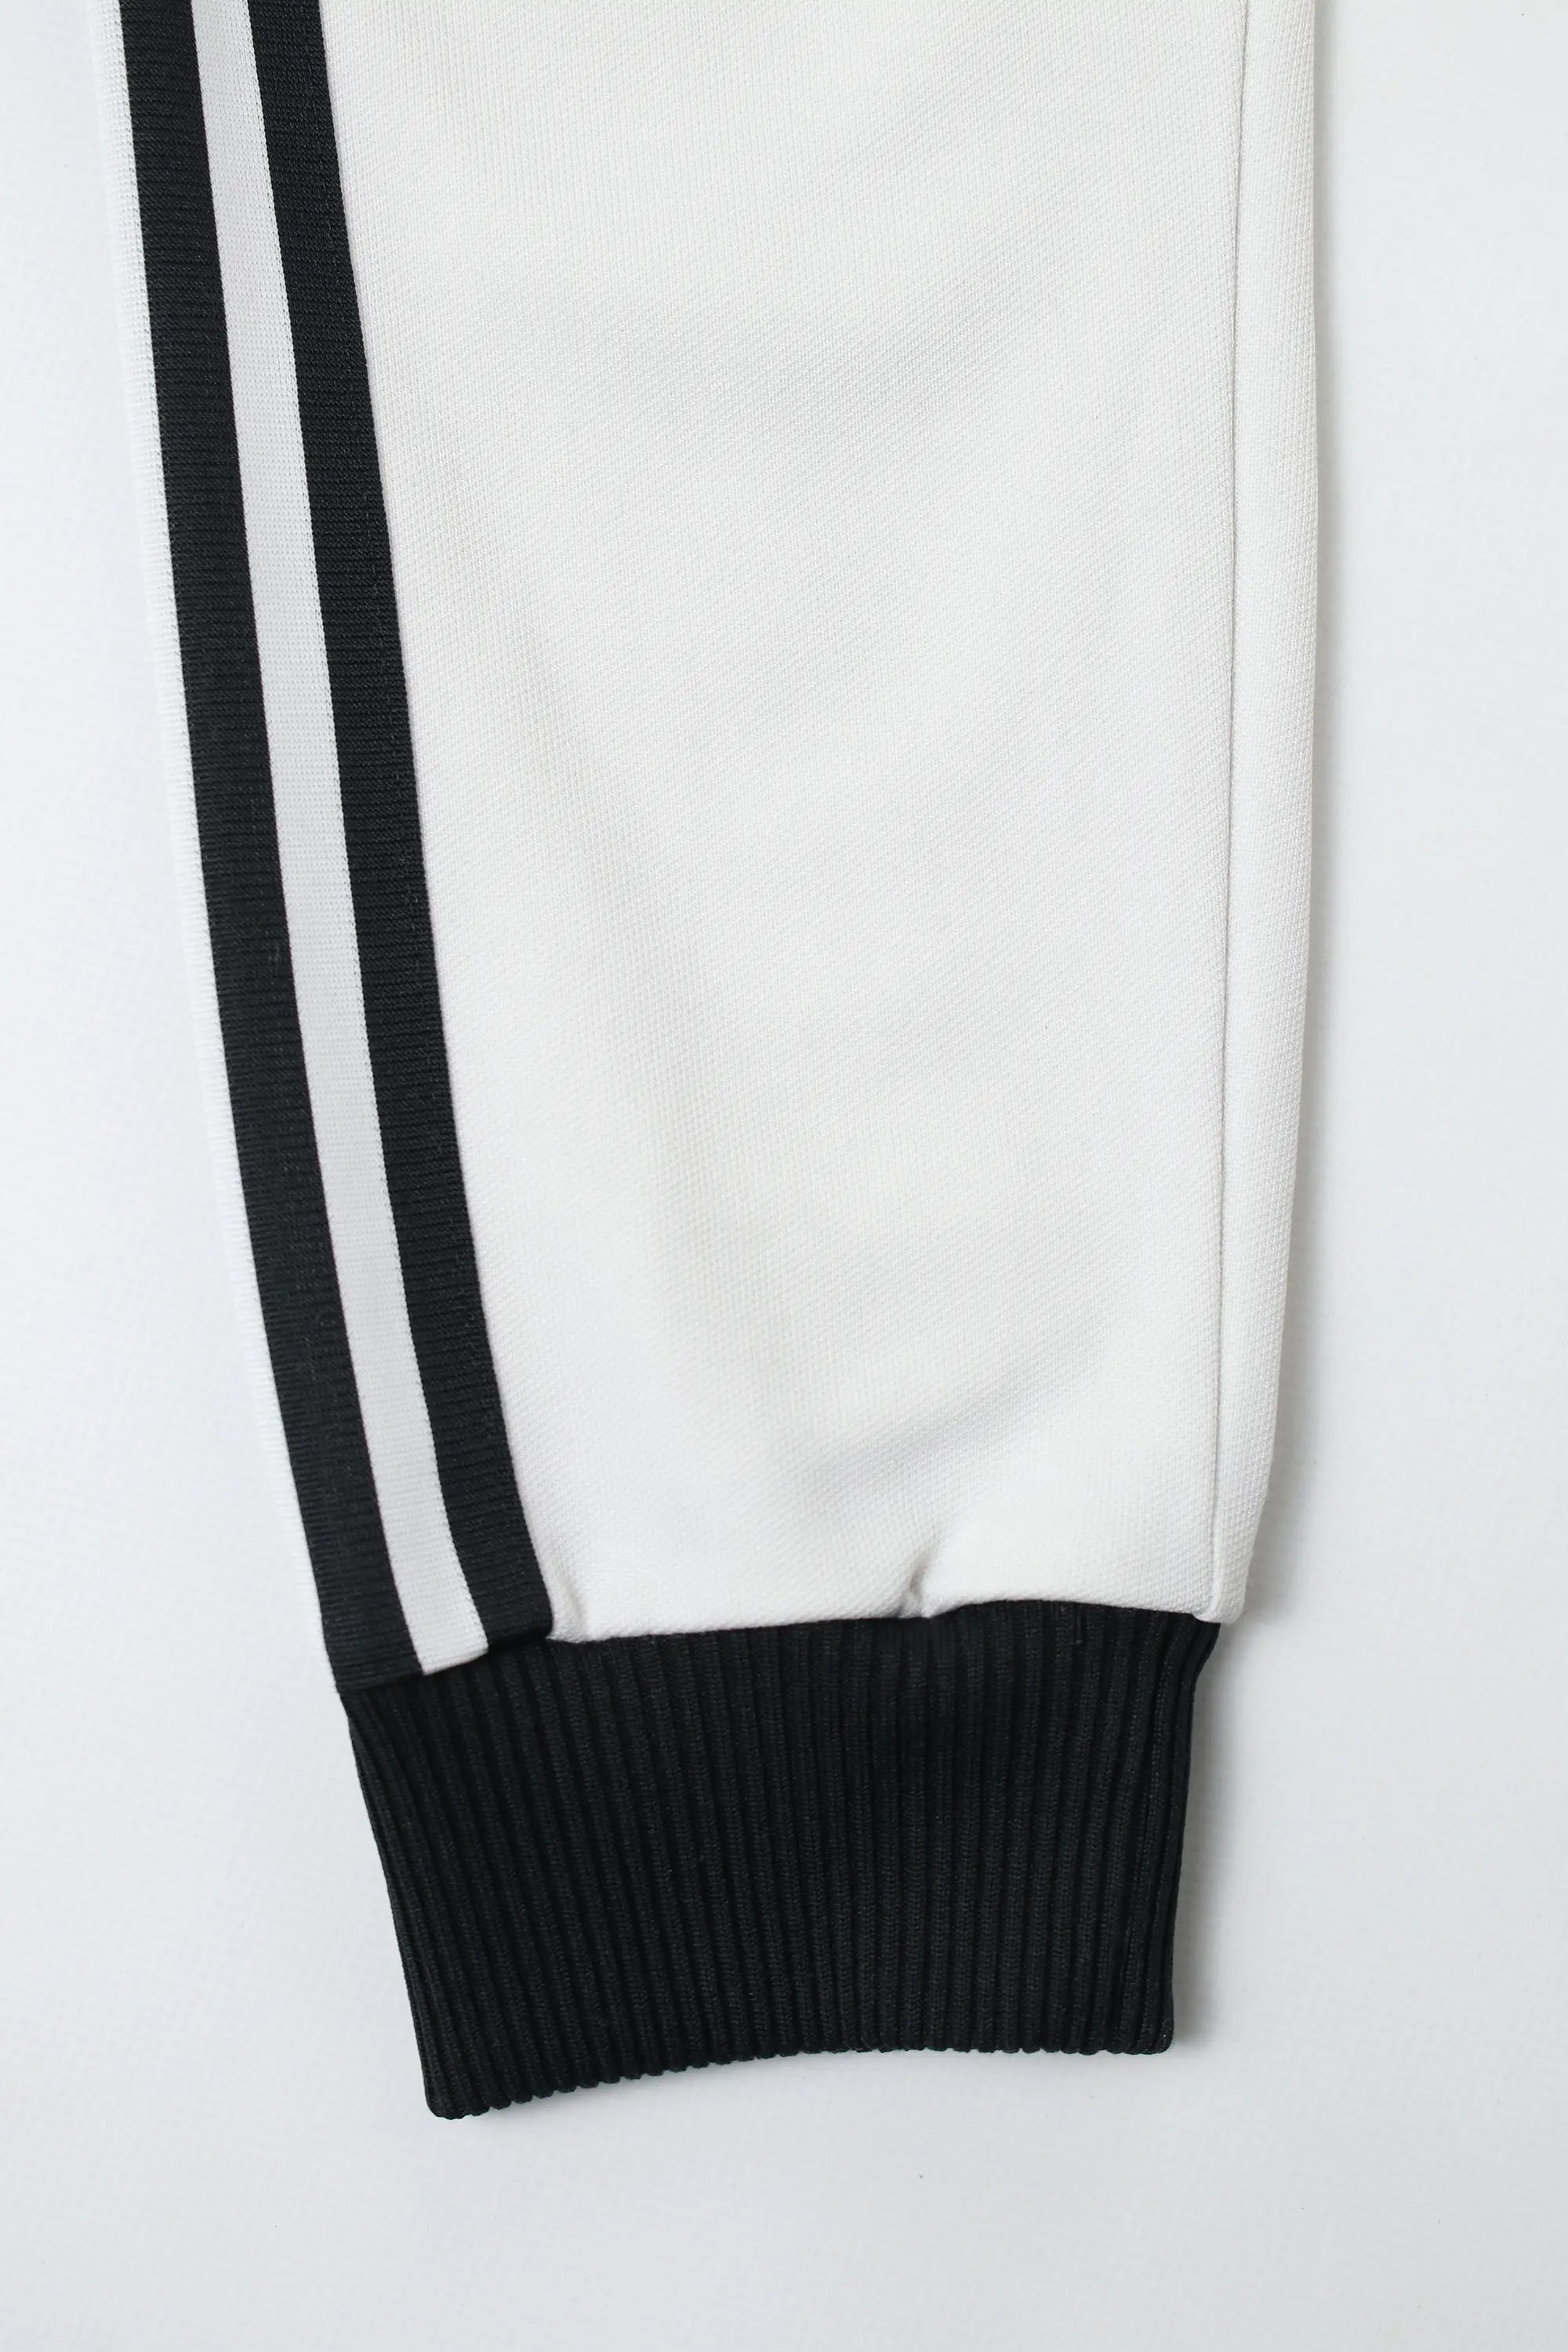 Adidas '08 Beckenbauer Trackjacket